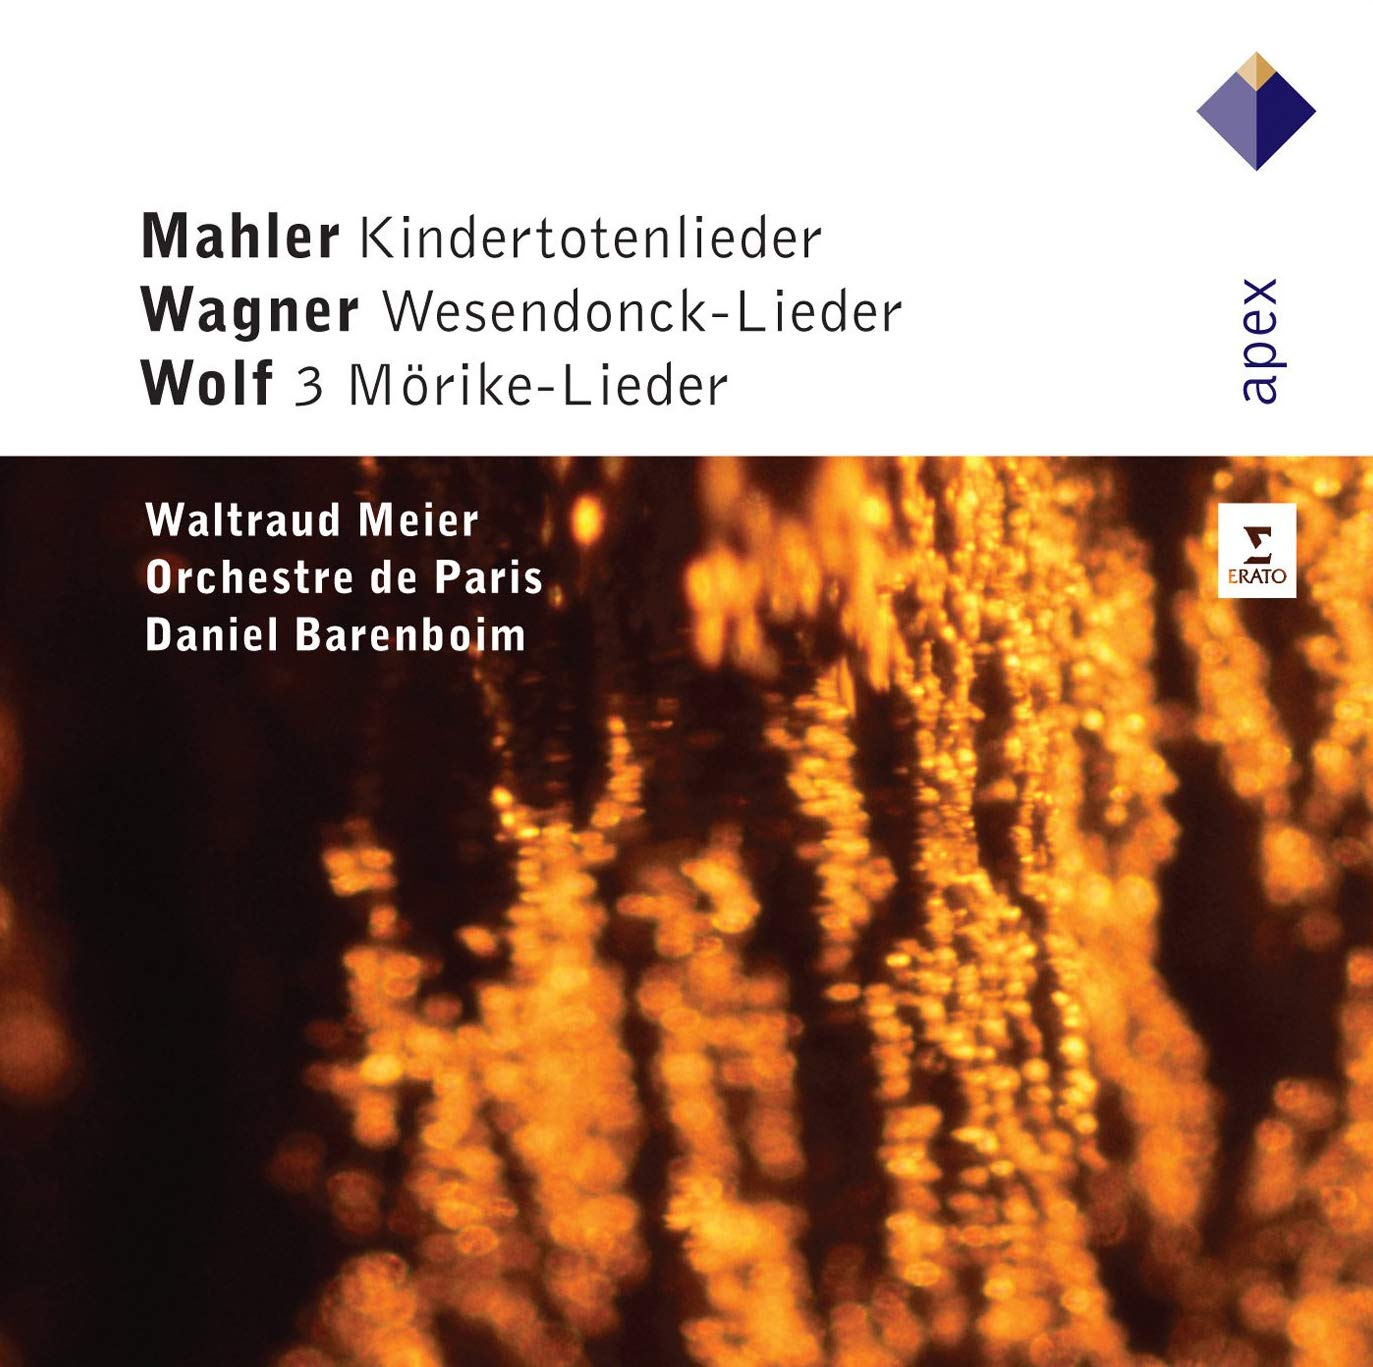 Mahler: Kindertotenlieder, Wagner: Wesendonck-Lieder, Wolf: 3 Morike-Lieder | Daniel Barenboim, Gustav Mahler, Richard Wagner, Hugo Wolf